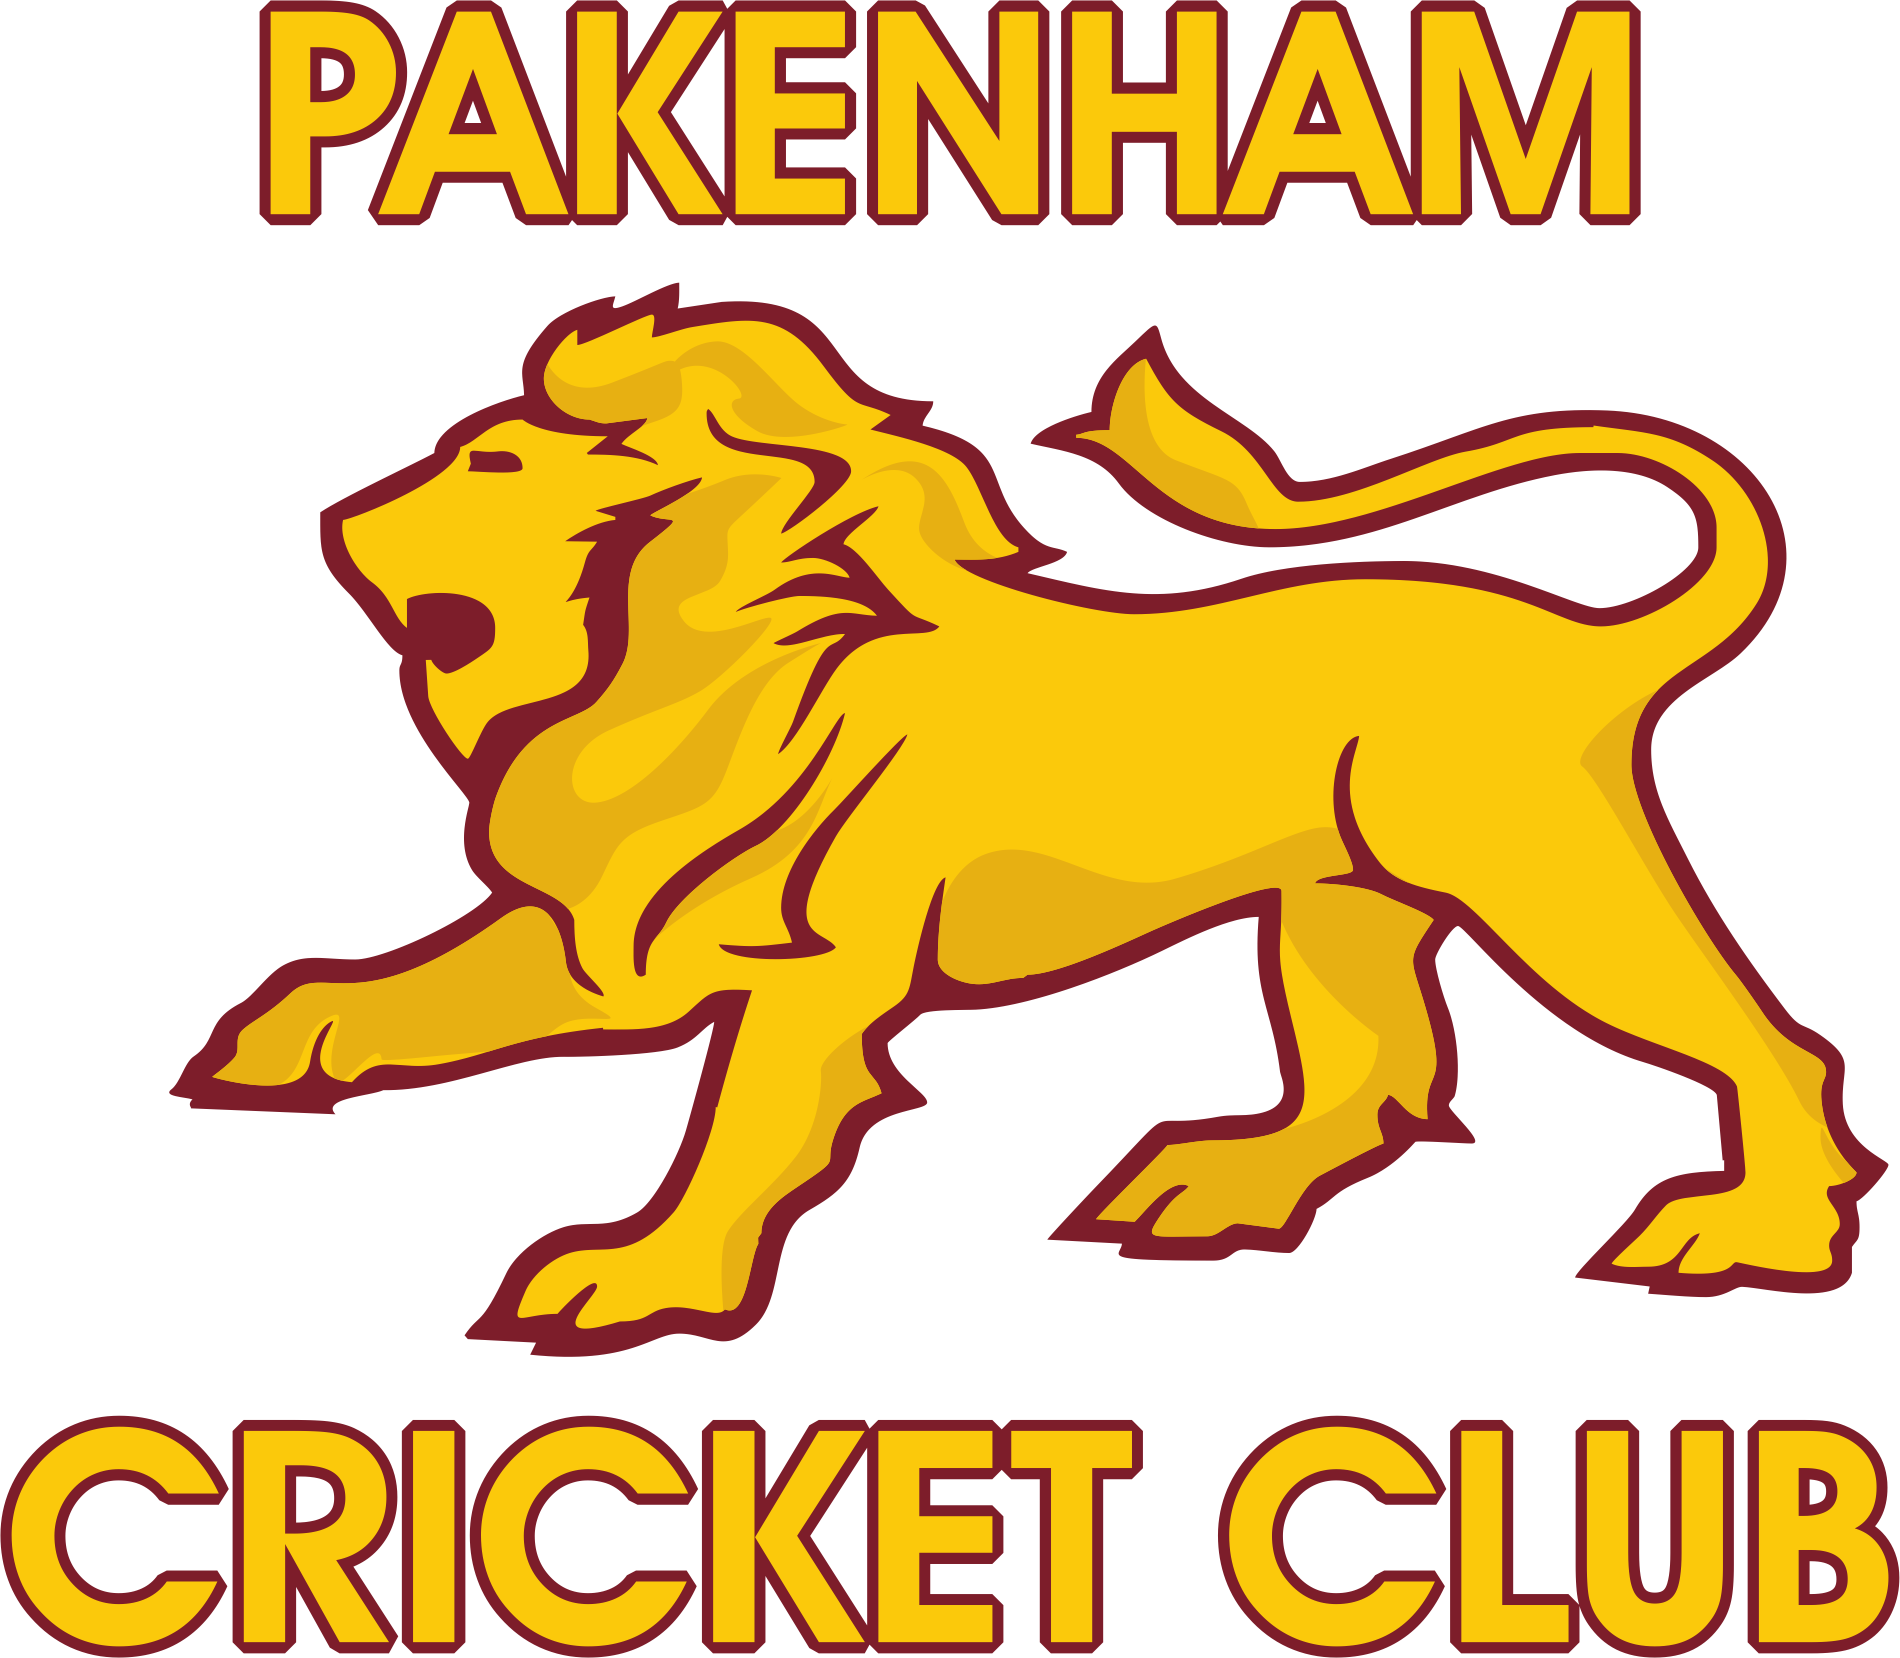 Pakenham cricket club logo.